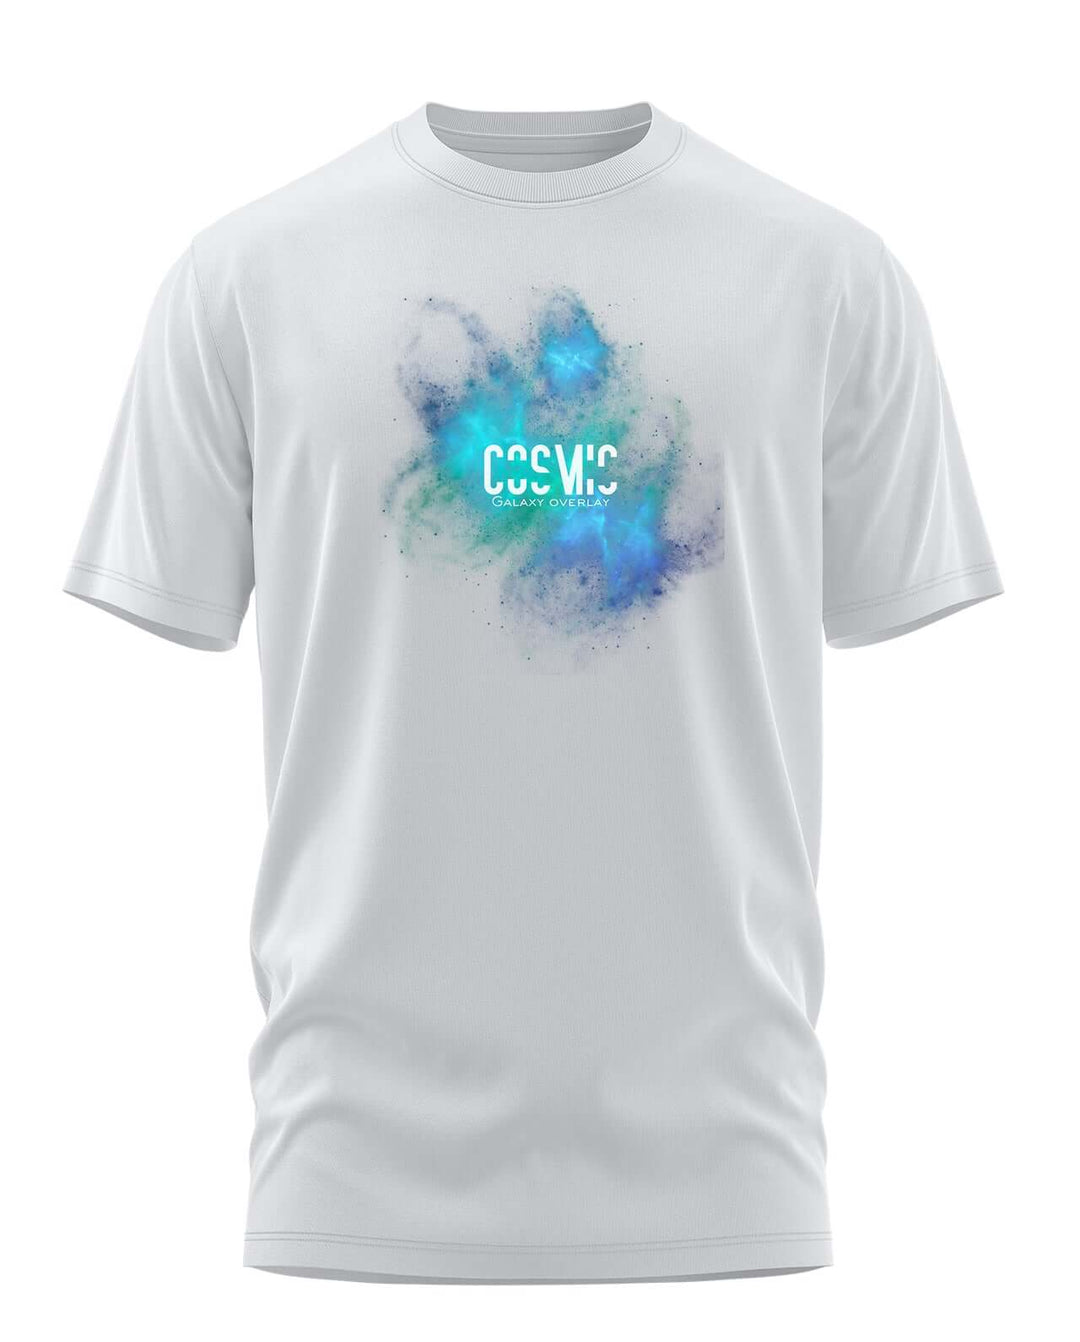 Cosmic Galaxy Overlay T-shirt